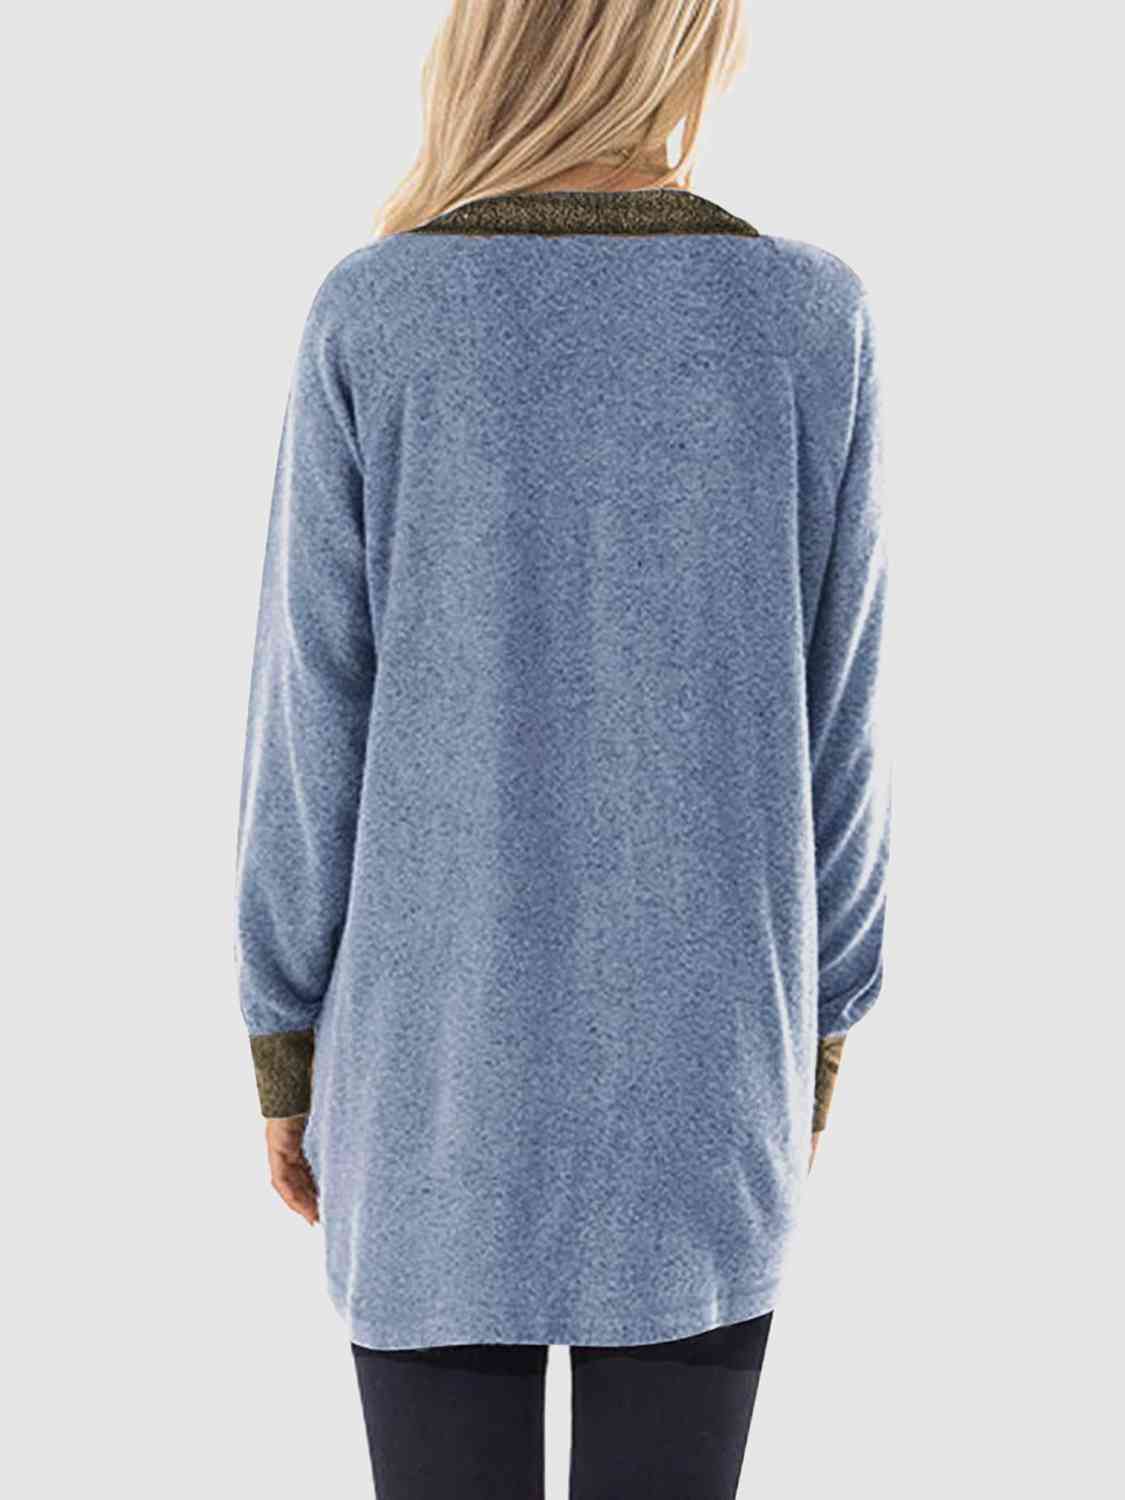 Contrast Half Zip Sweatshirt with Pockets - By Baano